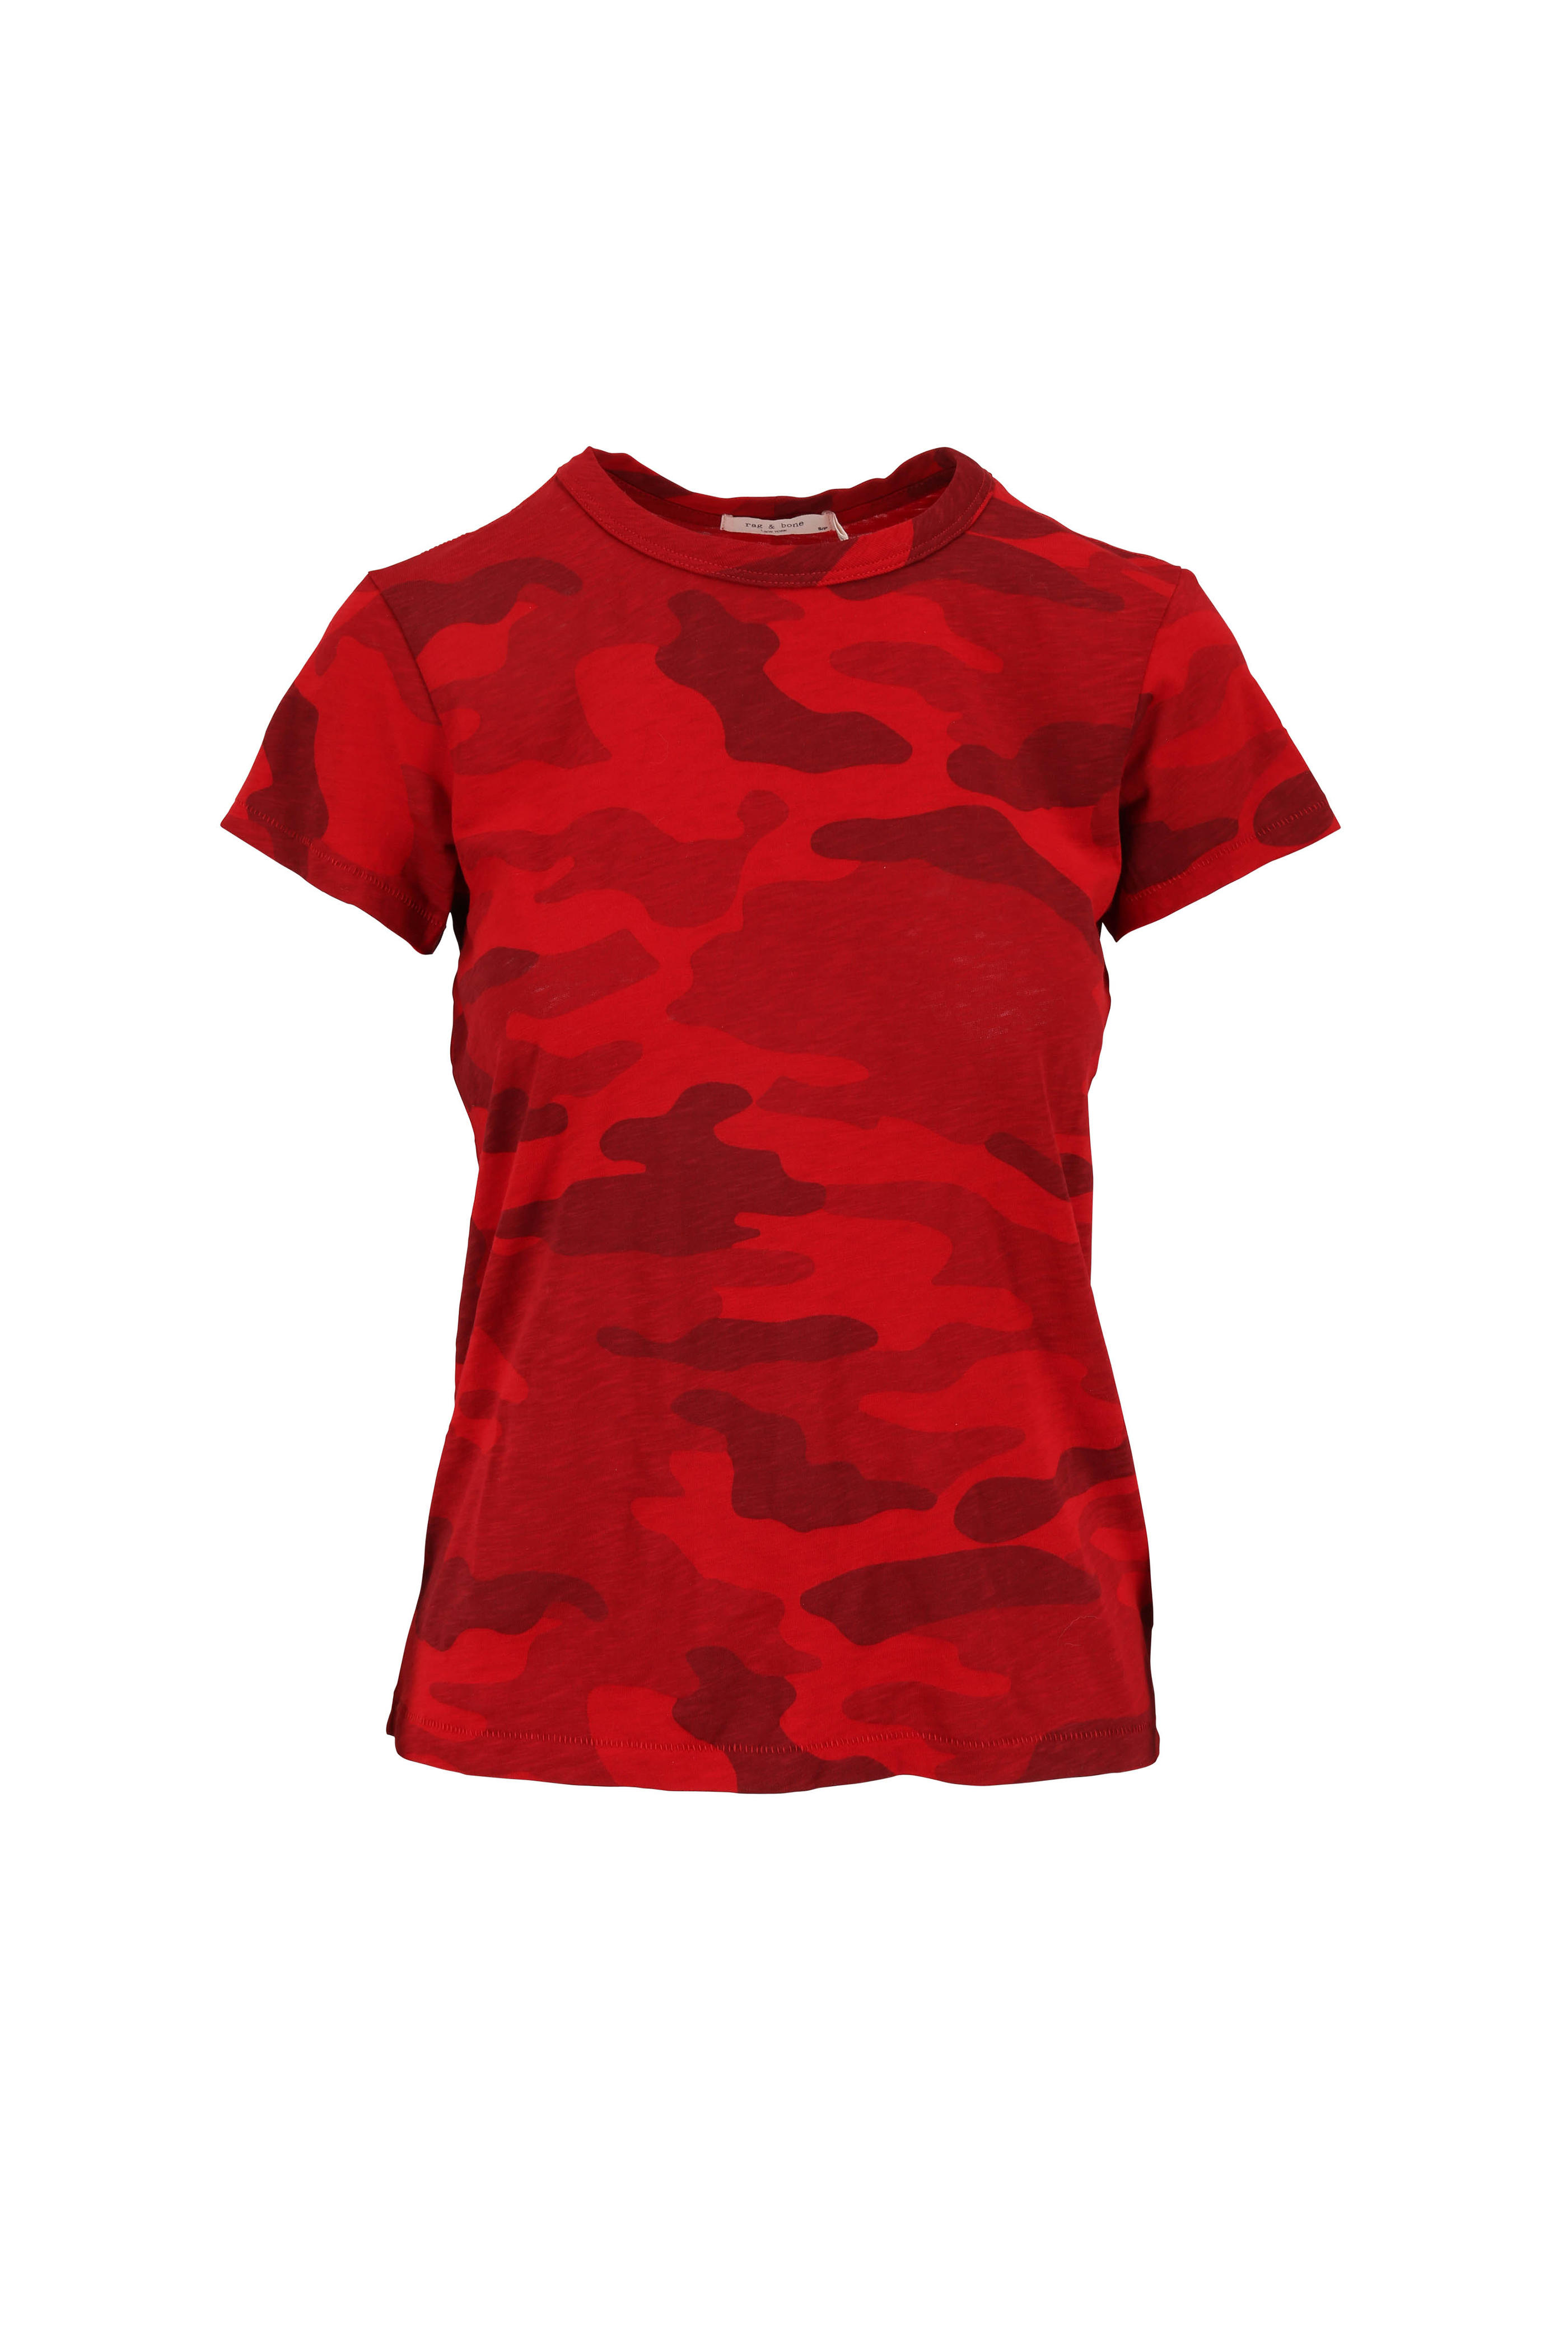 rag and bone red camo t shirt